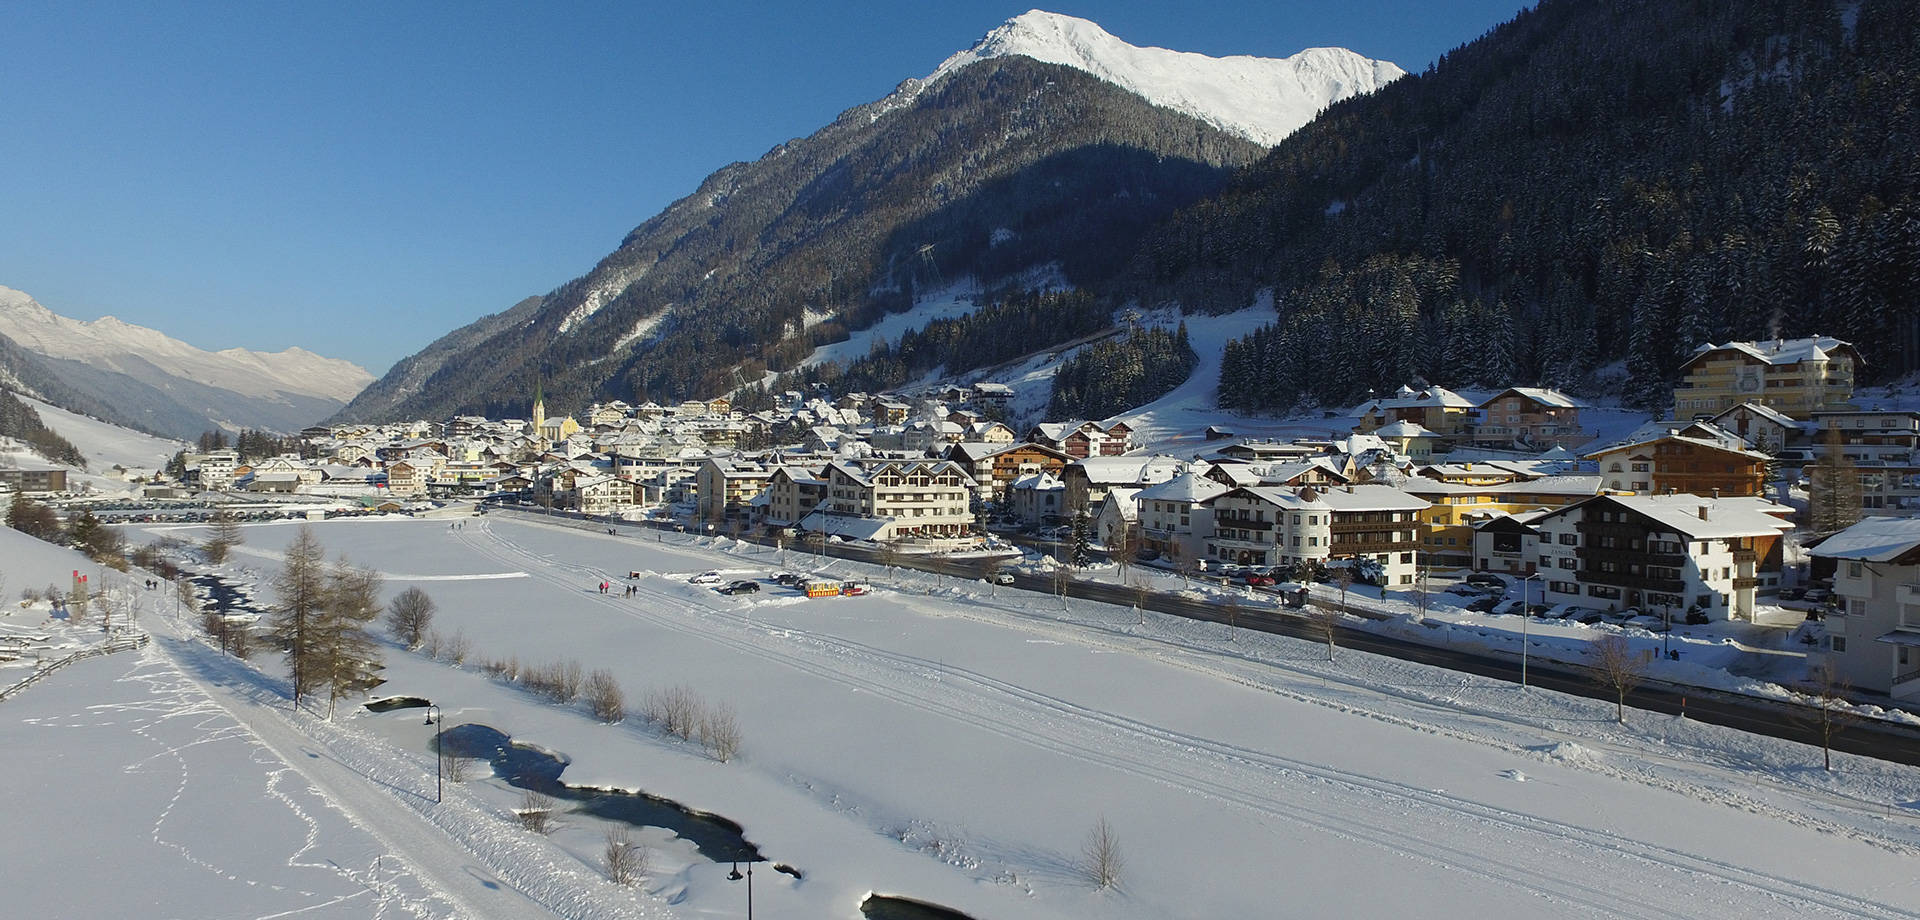  Ischgl in Winter Heart of the Alps